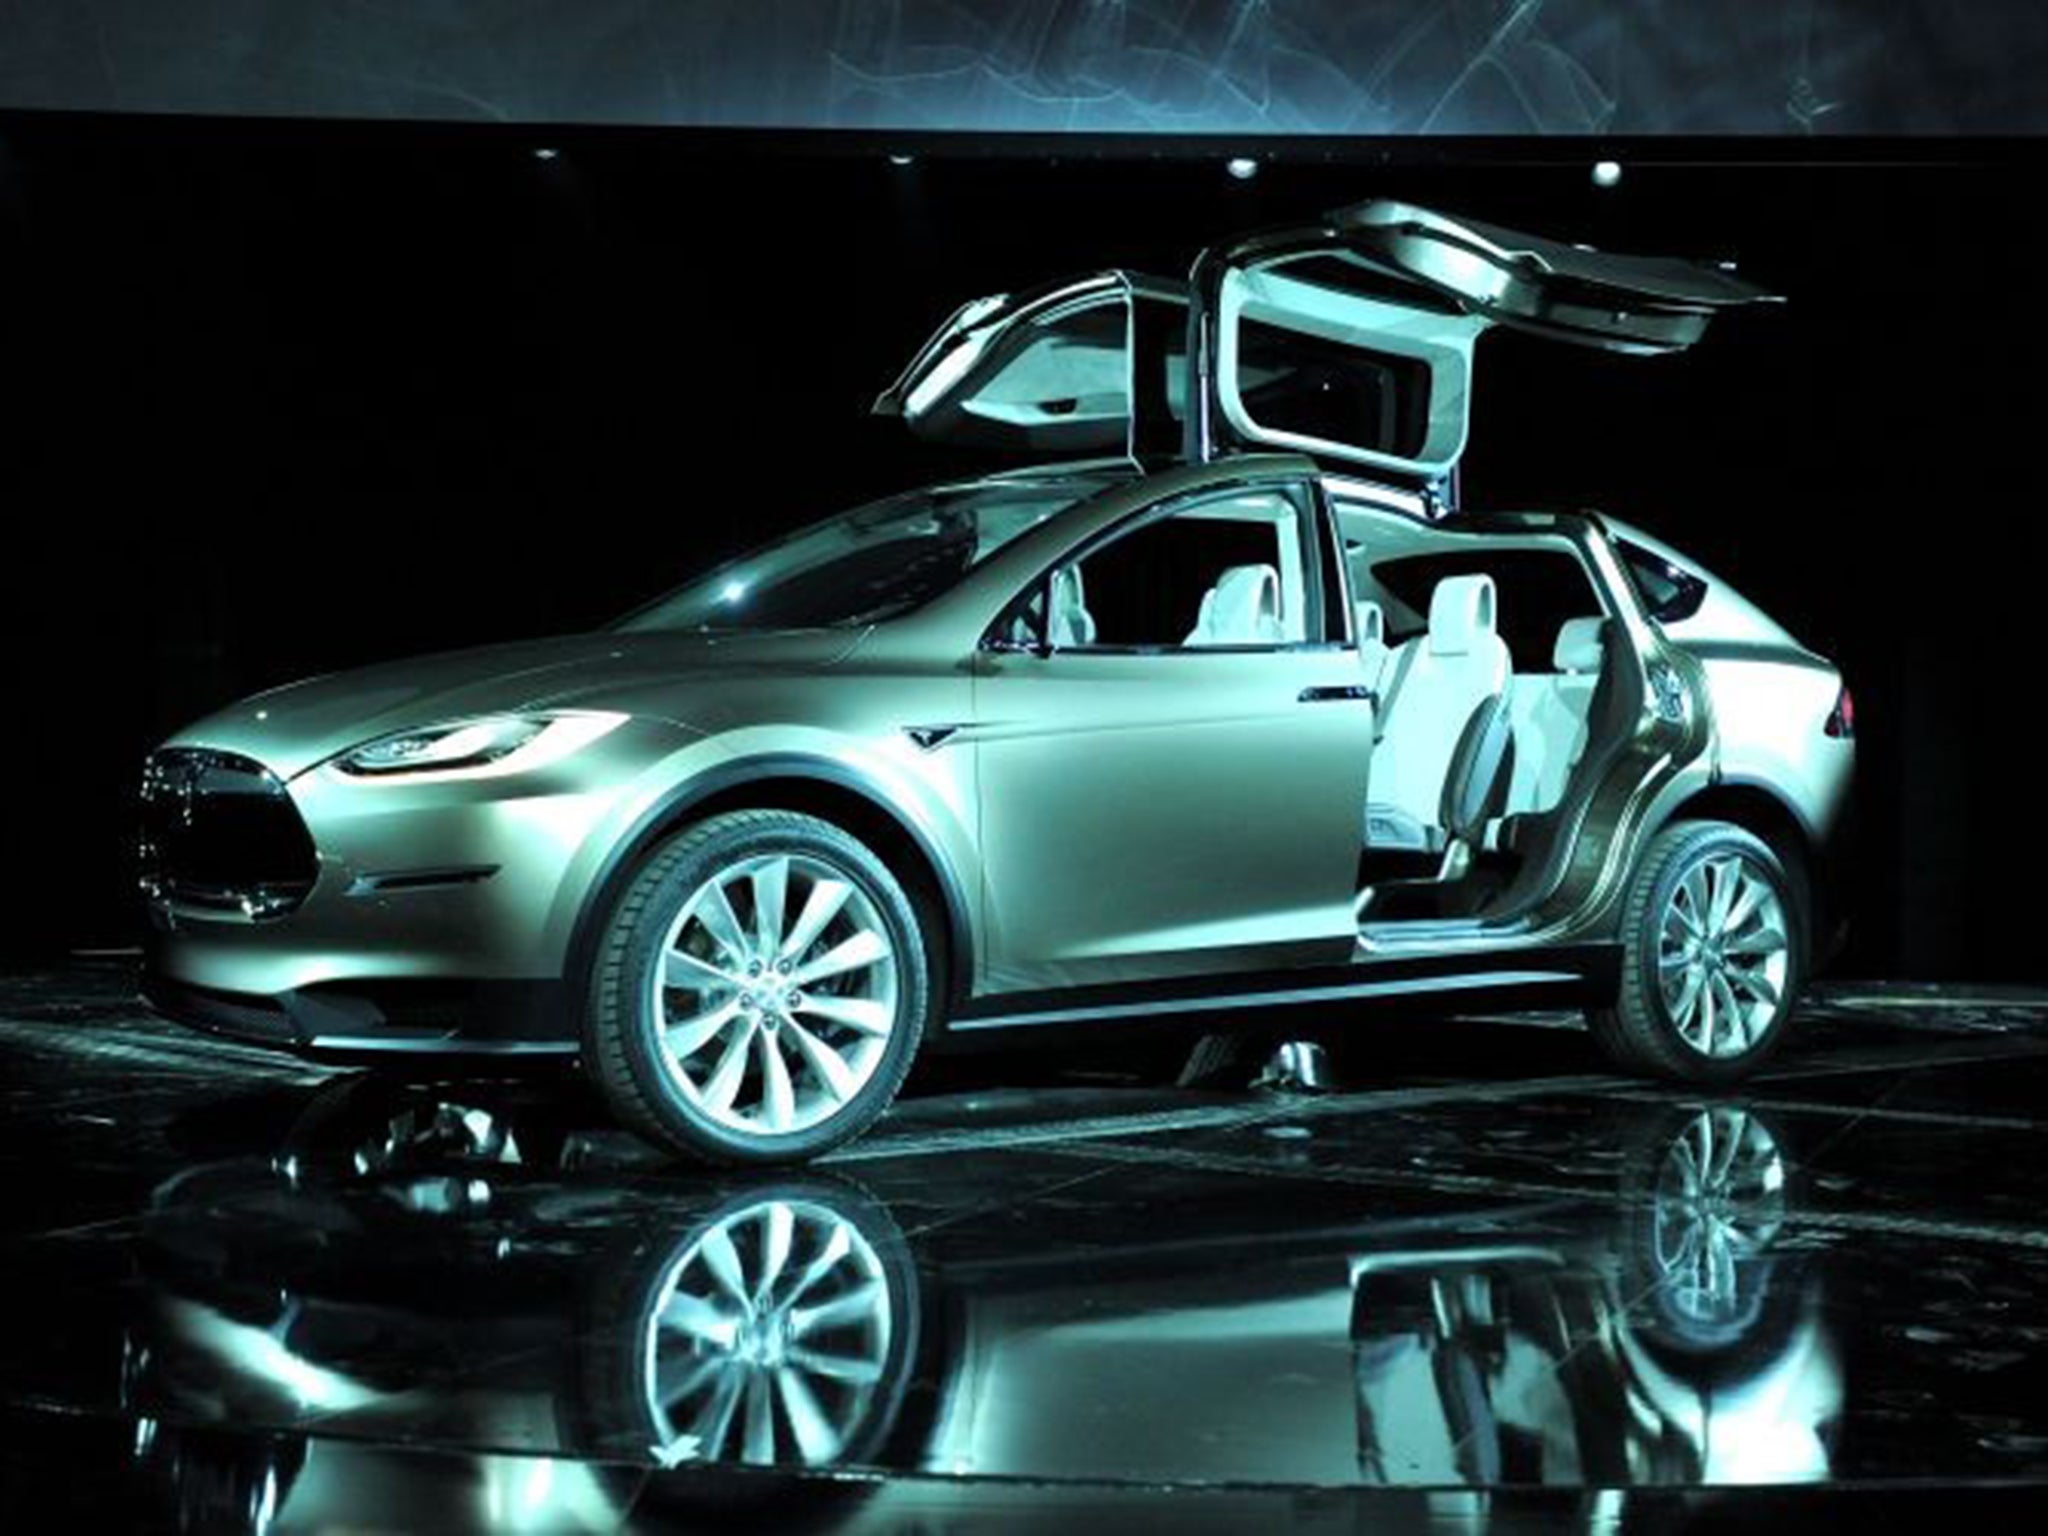 Tesla Worldwide Debut of Model X in Los Angeles, California